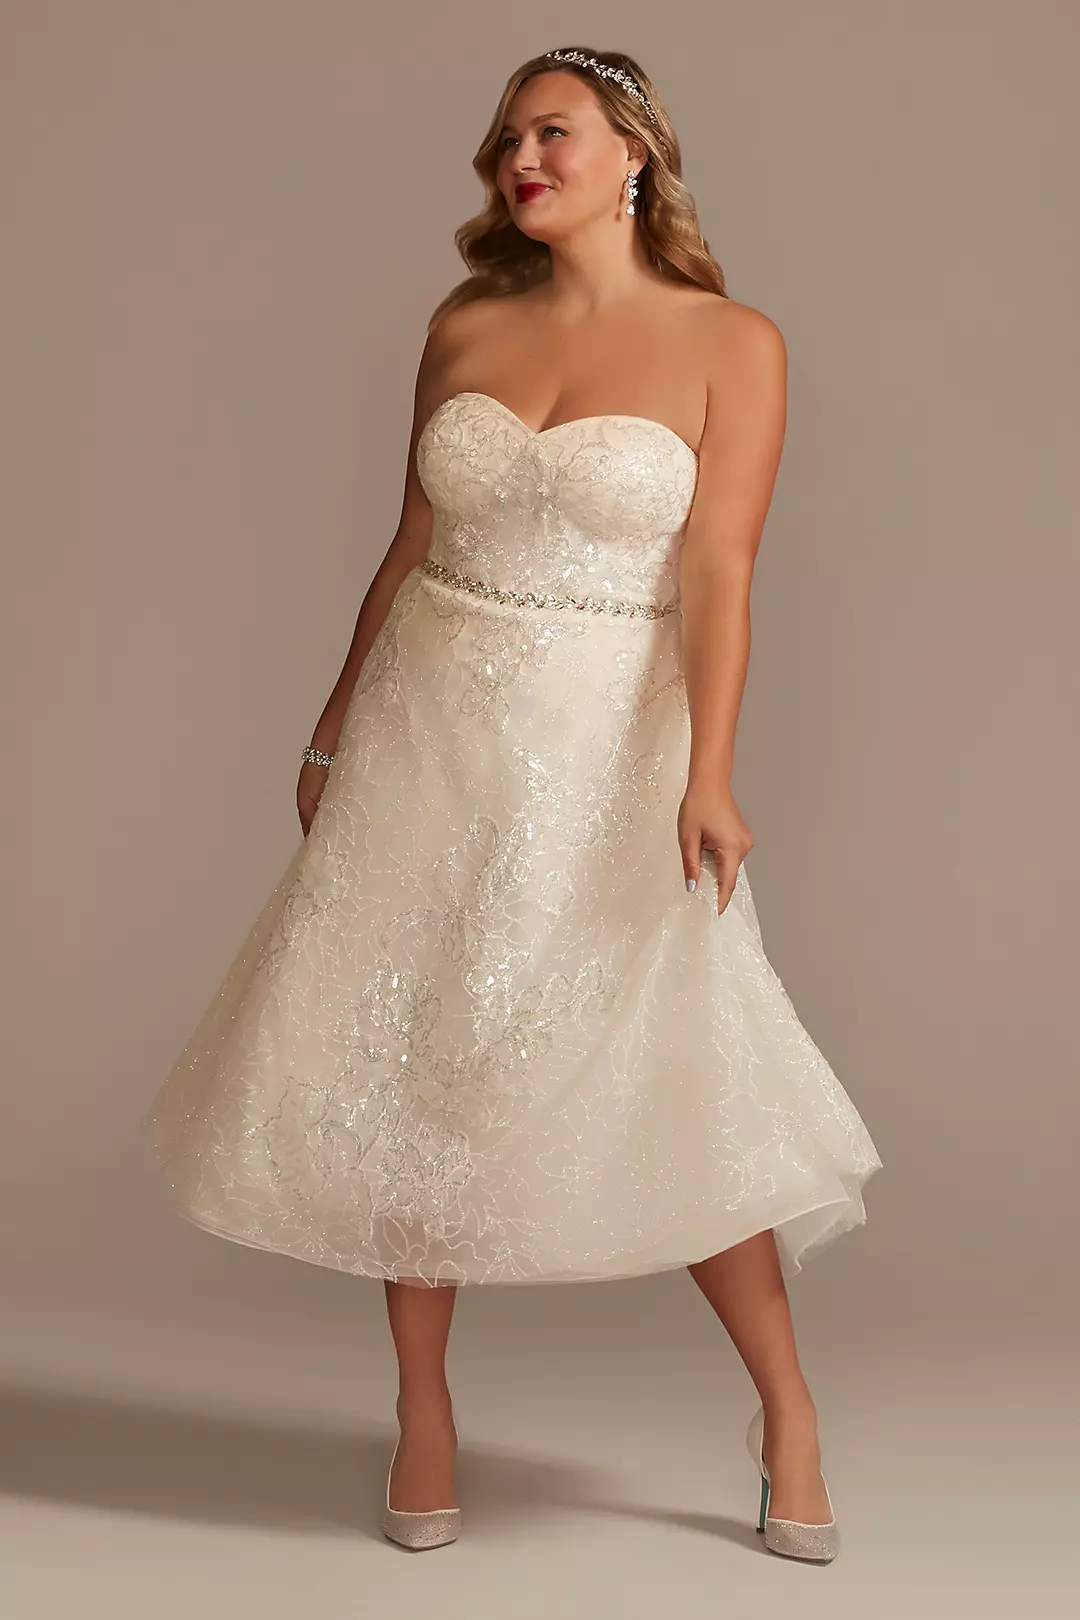 Floral Glitter Tulle Tea-Length Wedding Dress Image